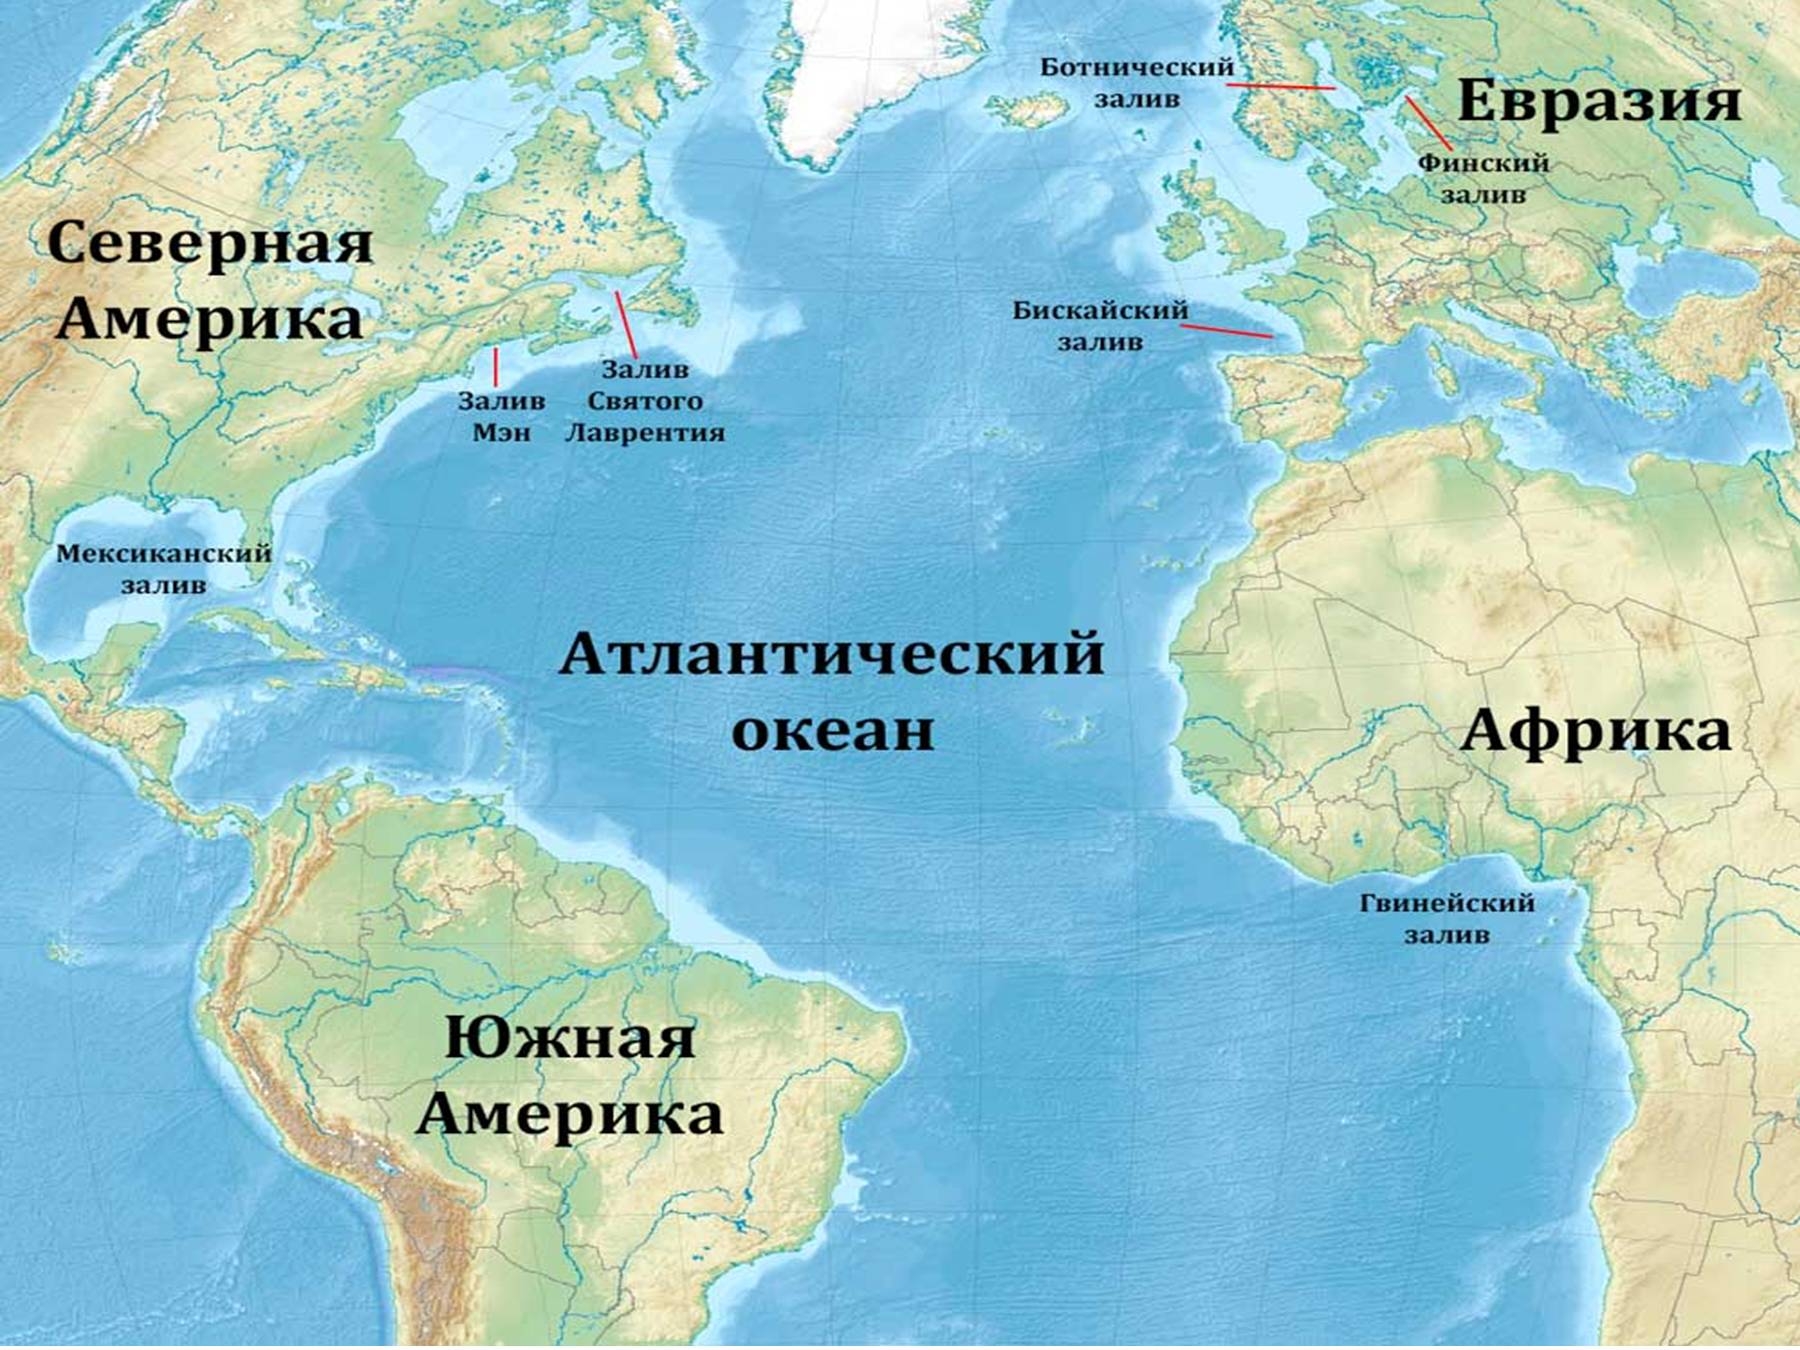 Острова и полуострова тихого океана названия. Атлантический океан на карте. Атлантический океан на коте. Анилантическиц акеан на картк. Территория Атлантического океана.